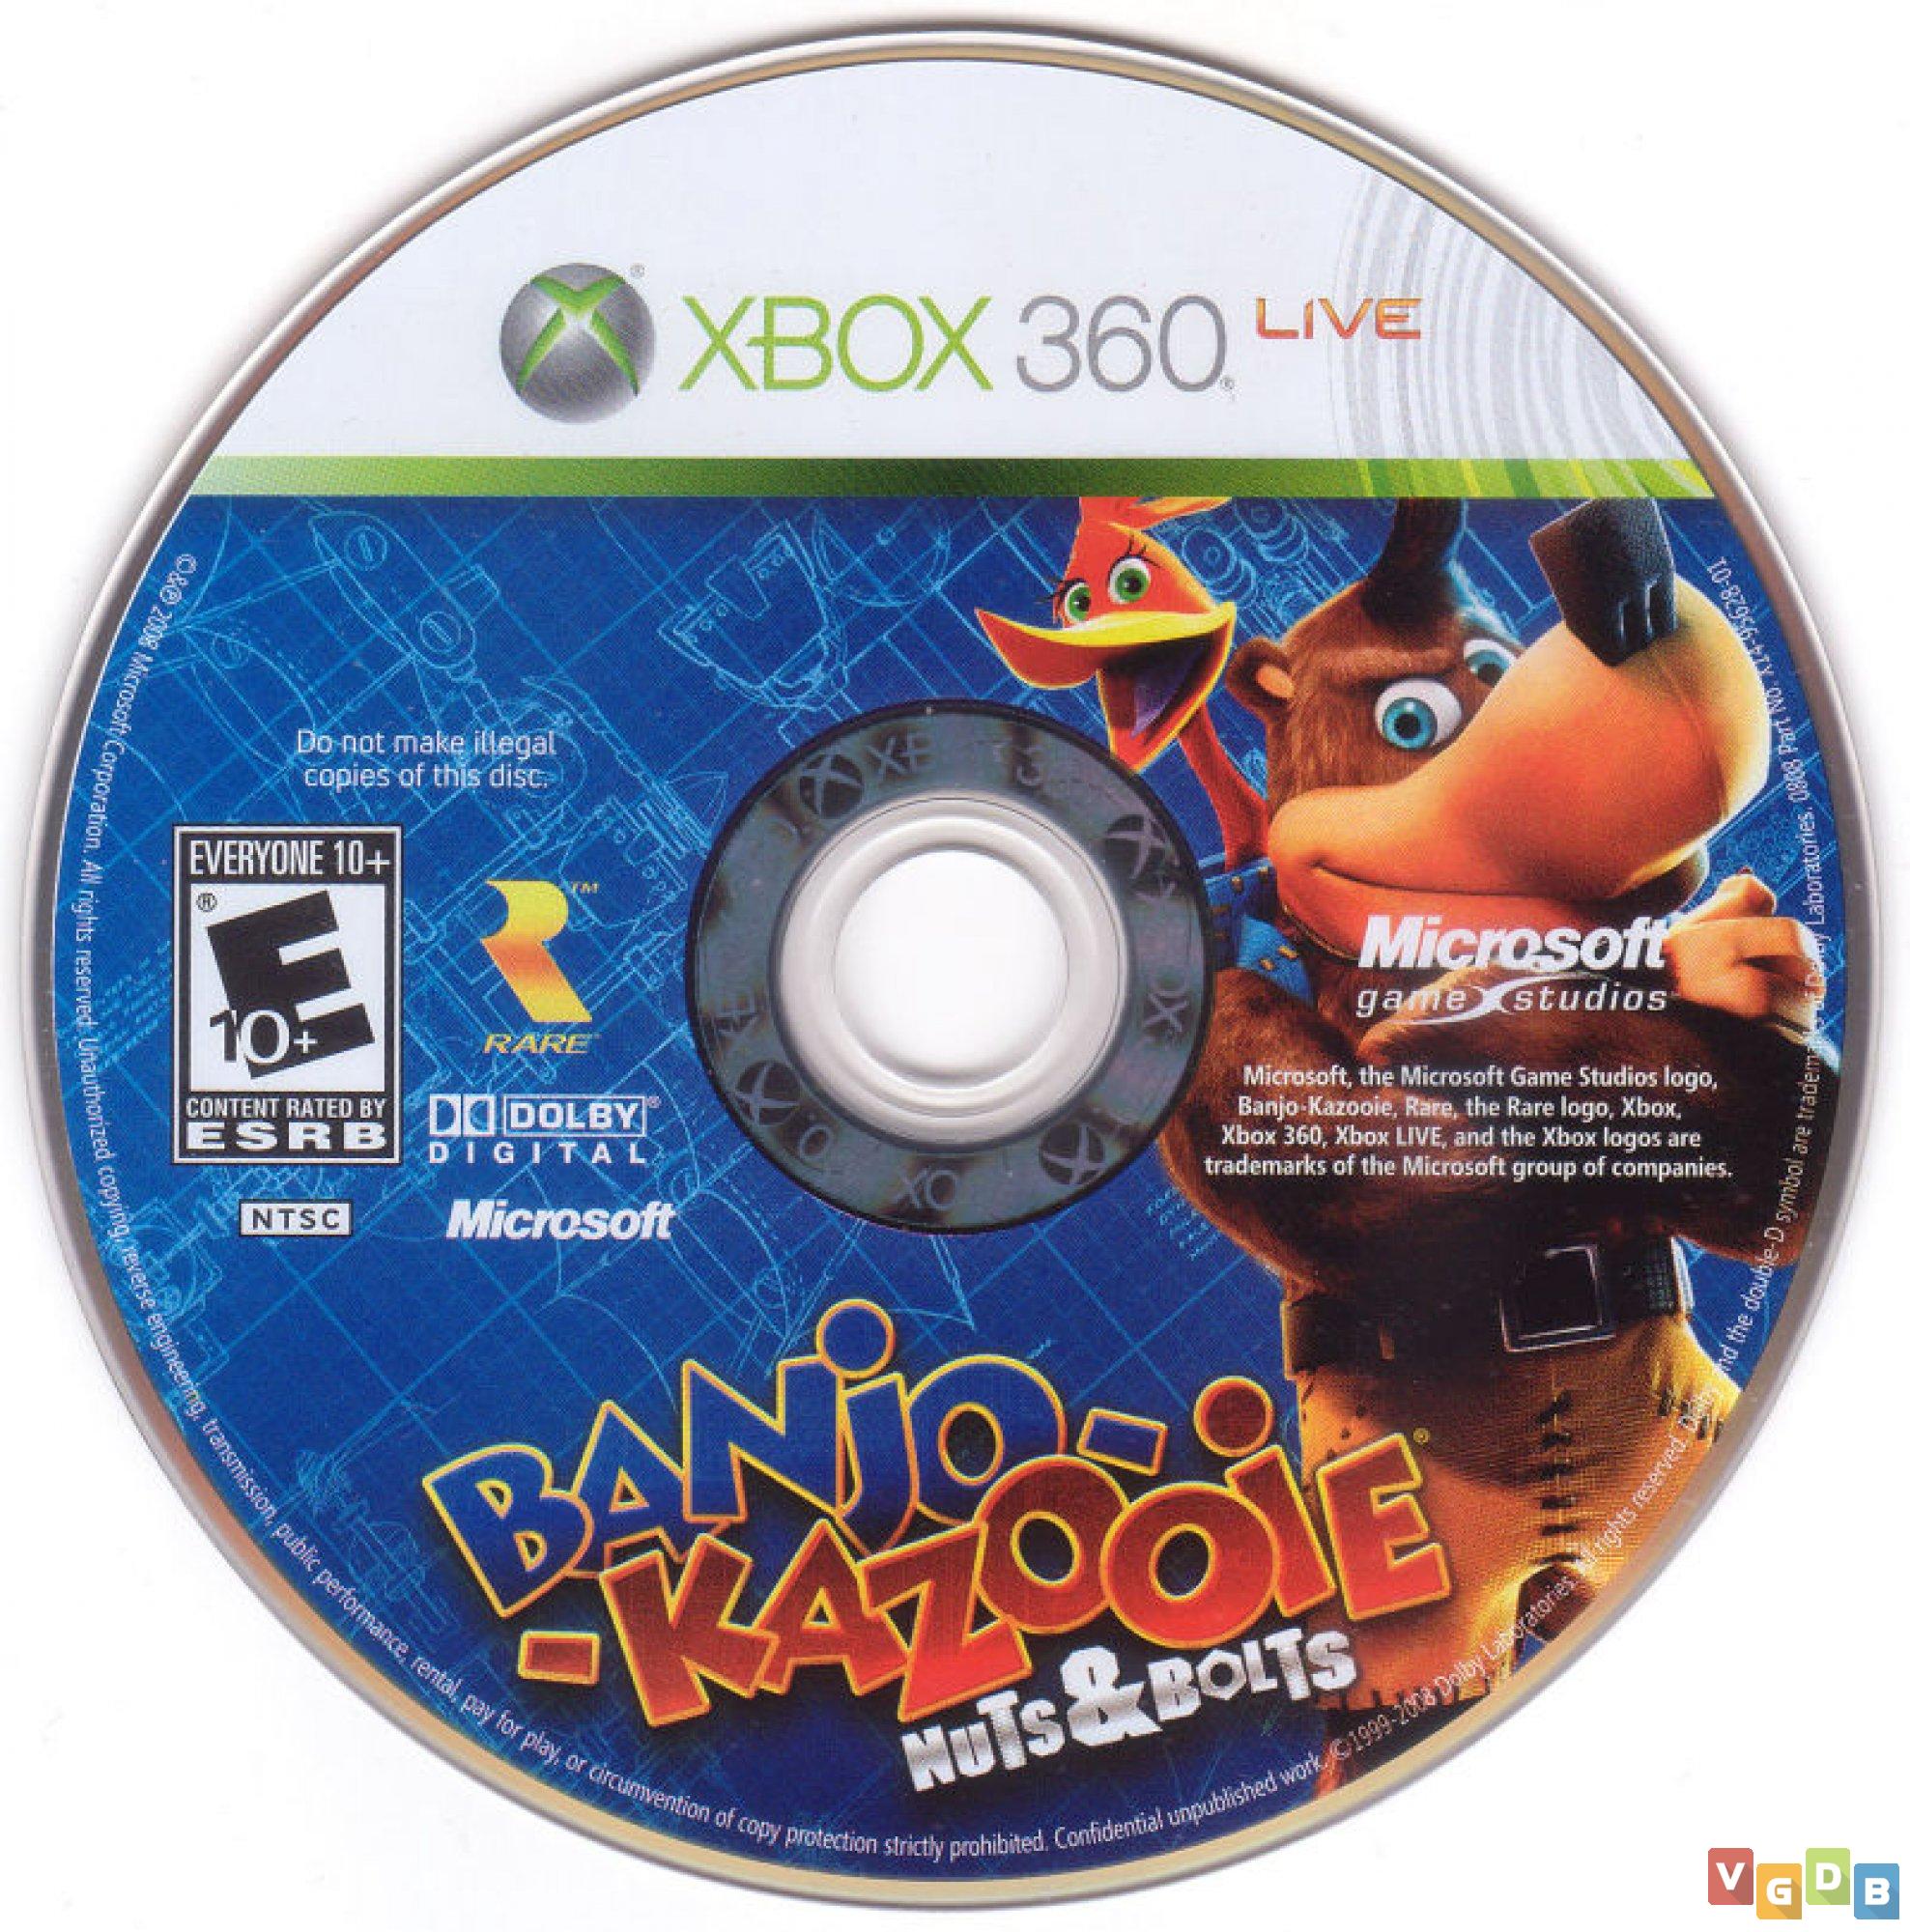 Jogo Banjo-Kazooie Nuts & Bolts - Xbox 360 - MeuGameUsado